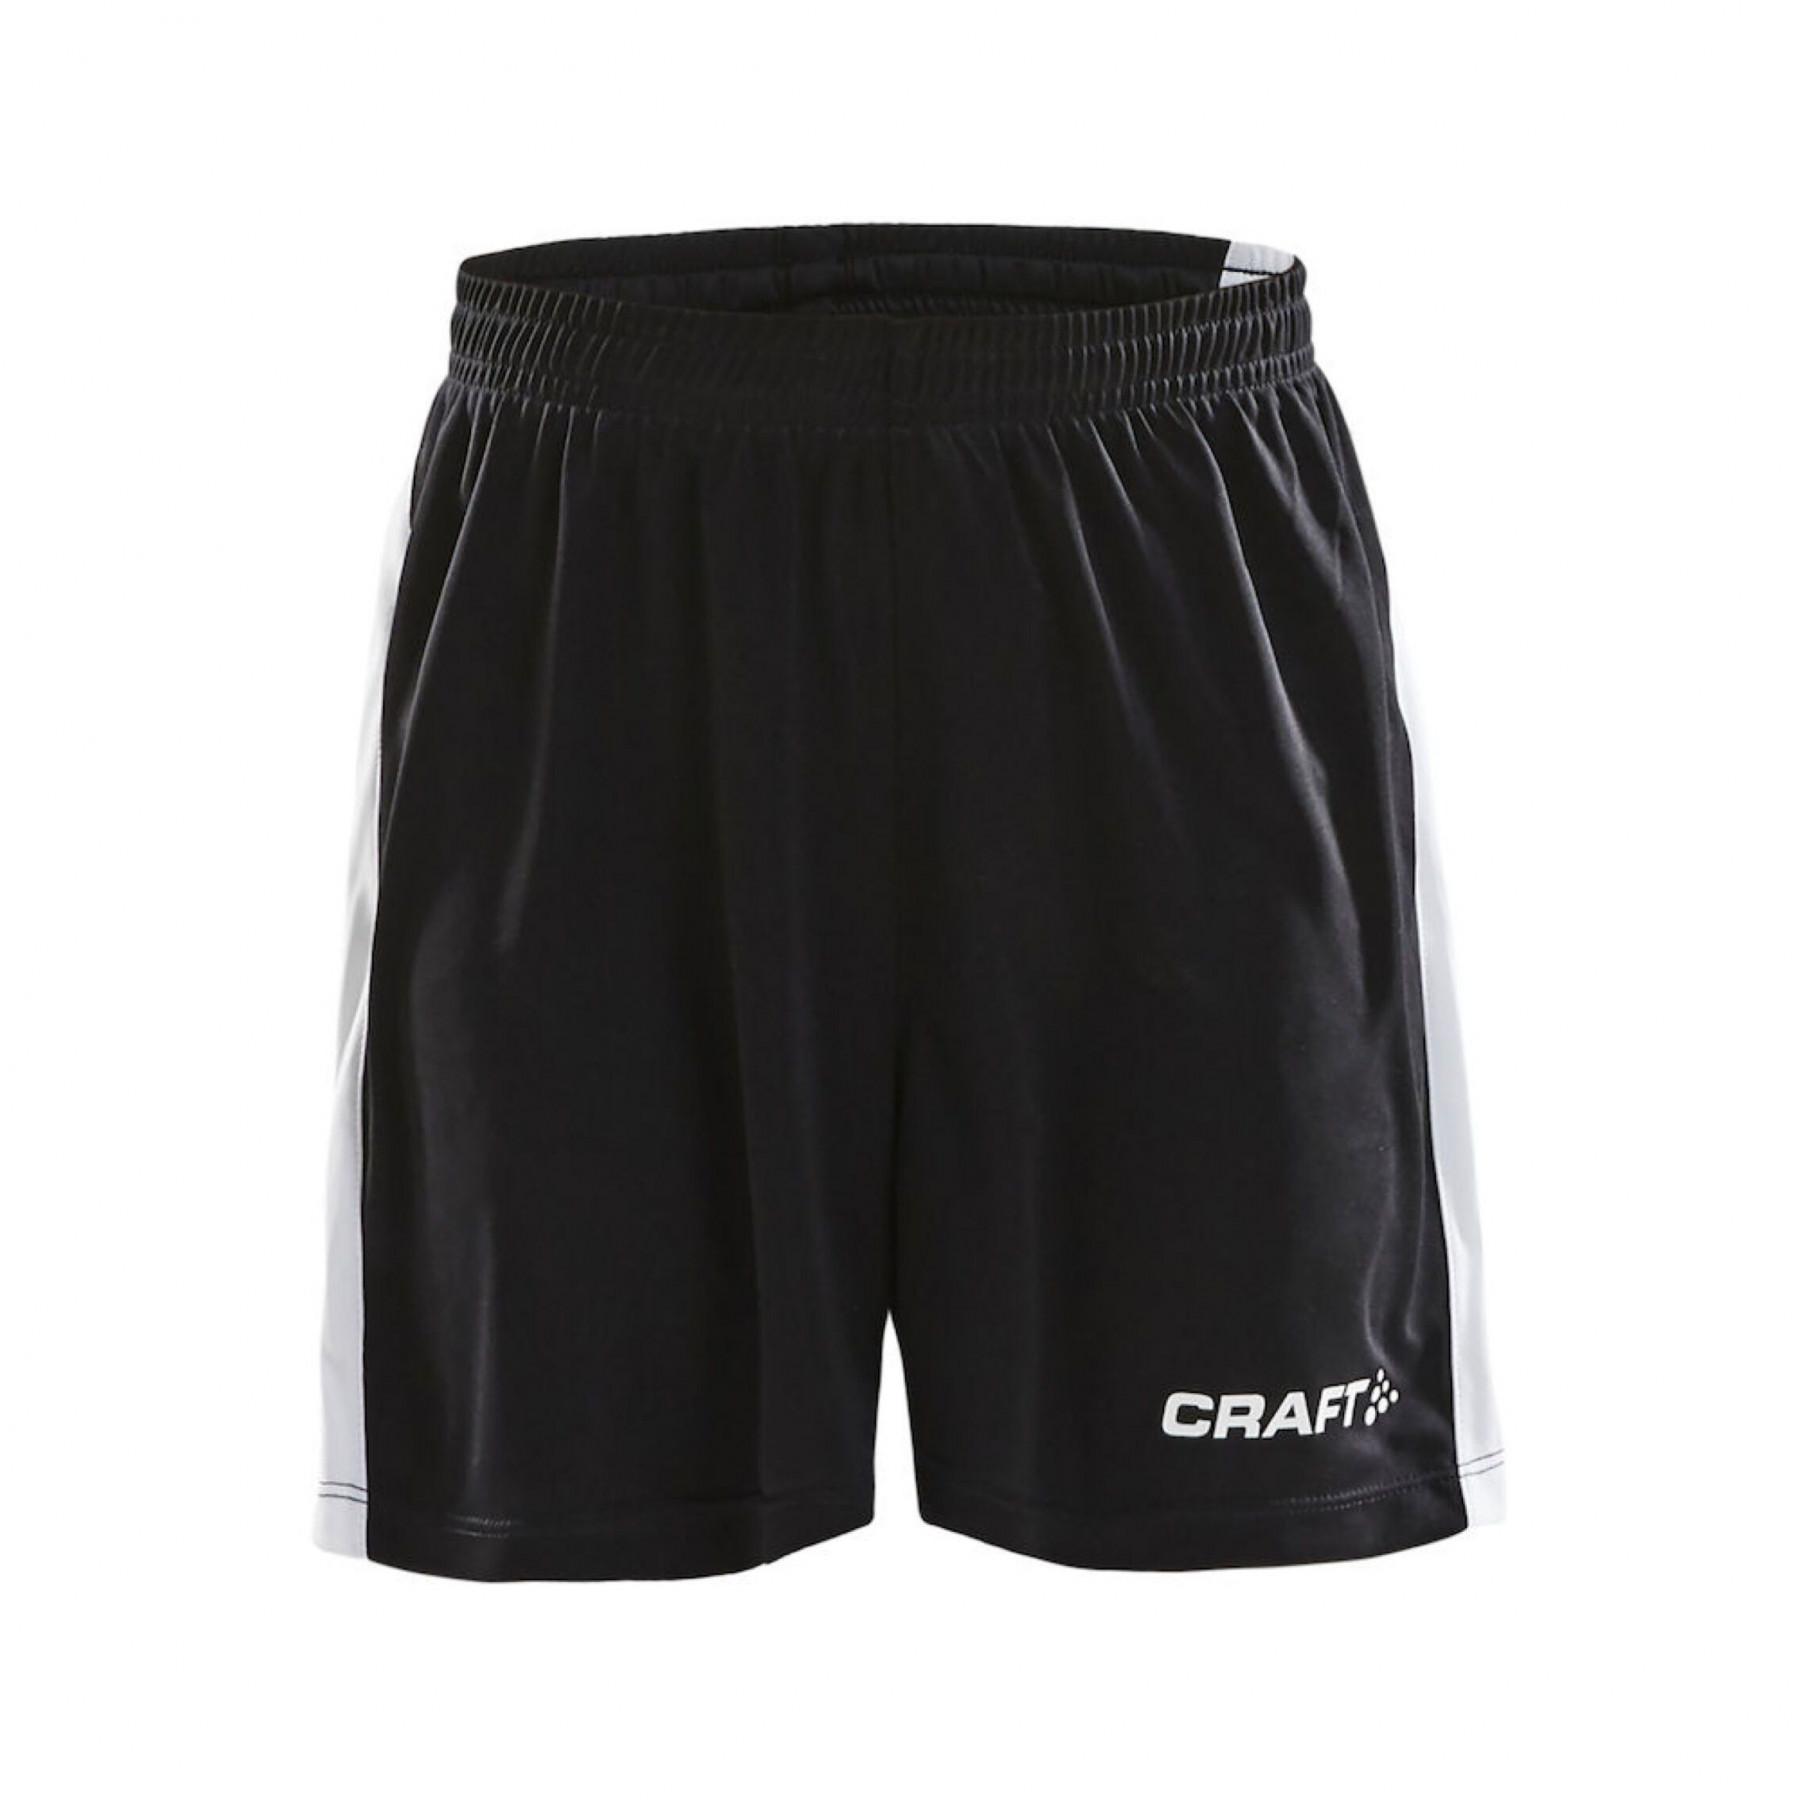 Kinder shorts Craft pro control longer